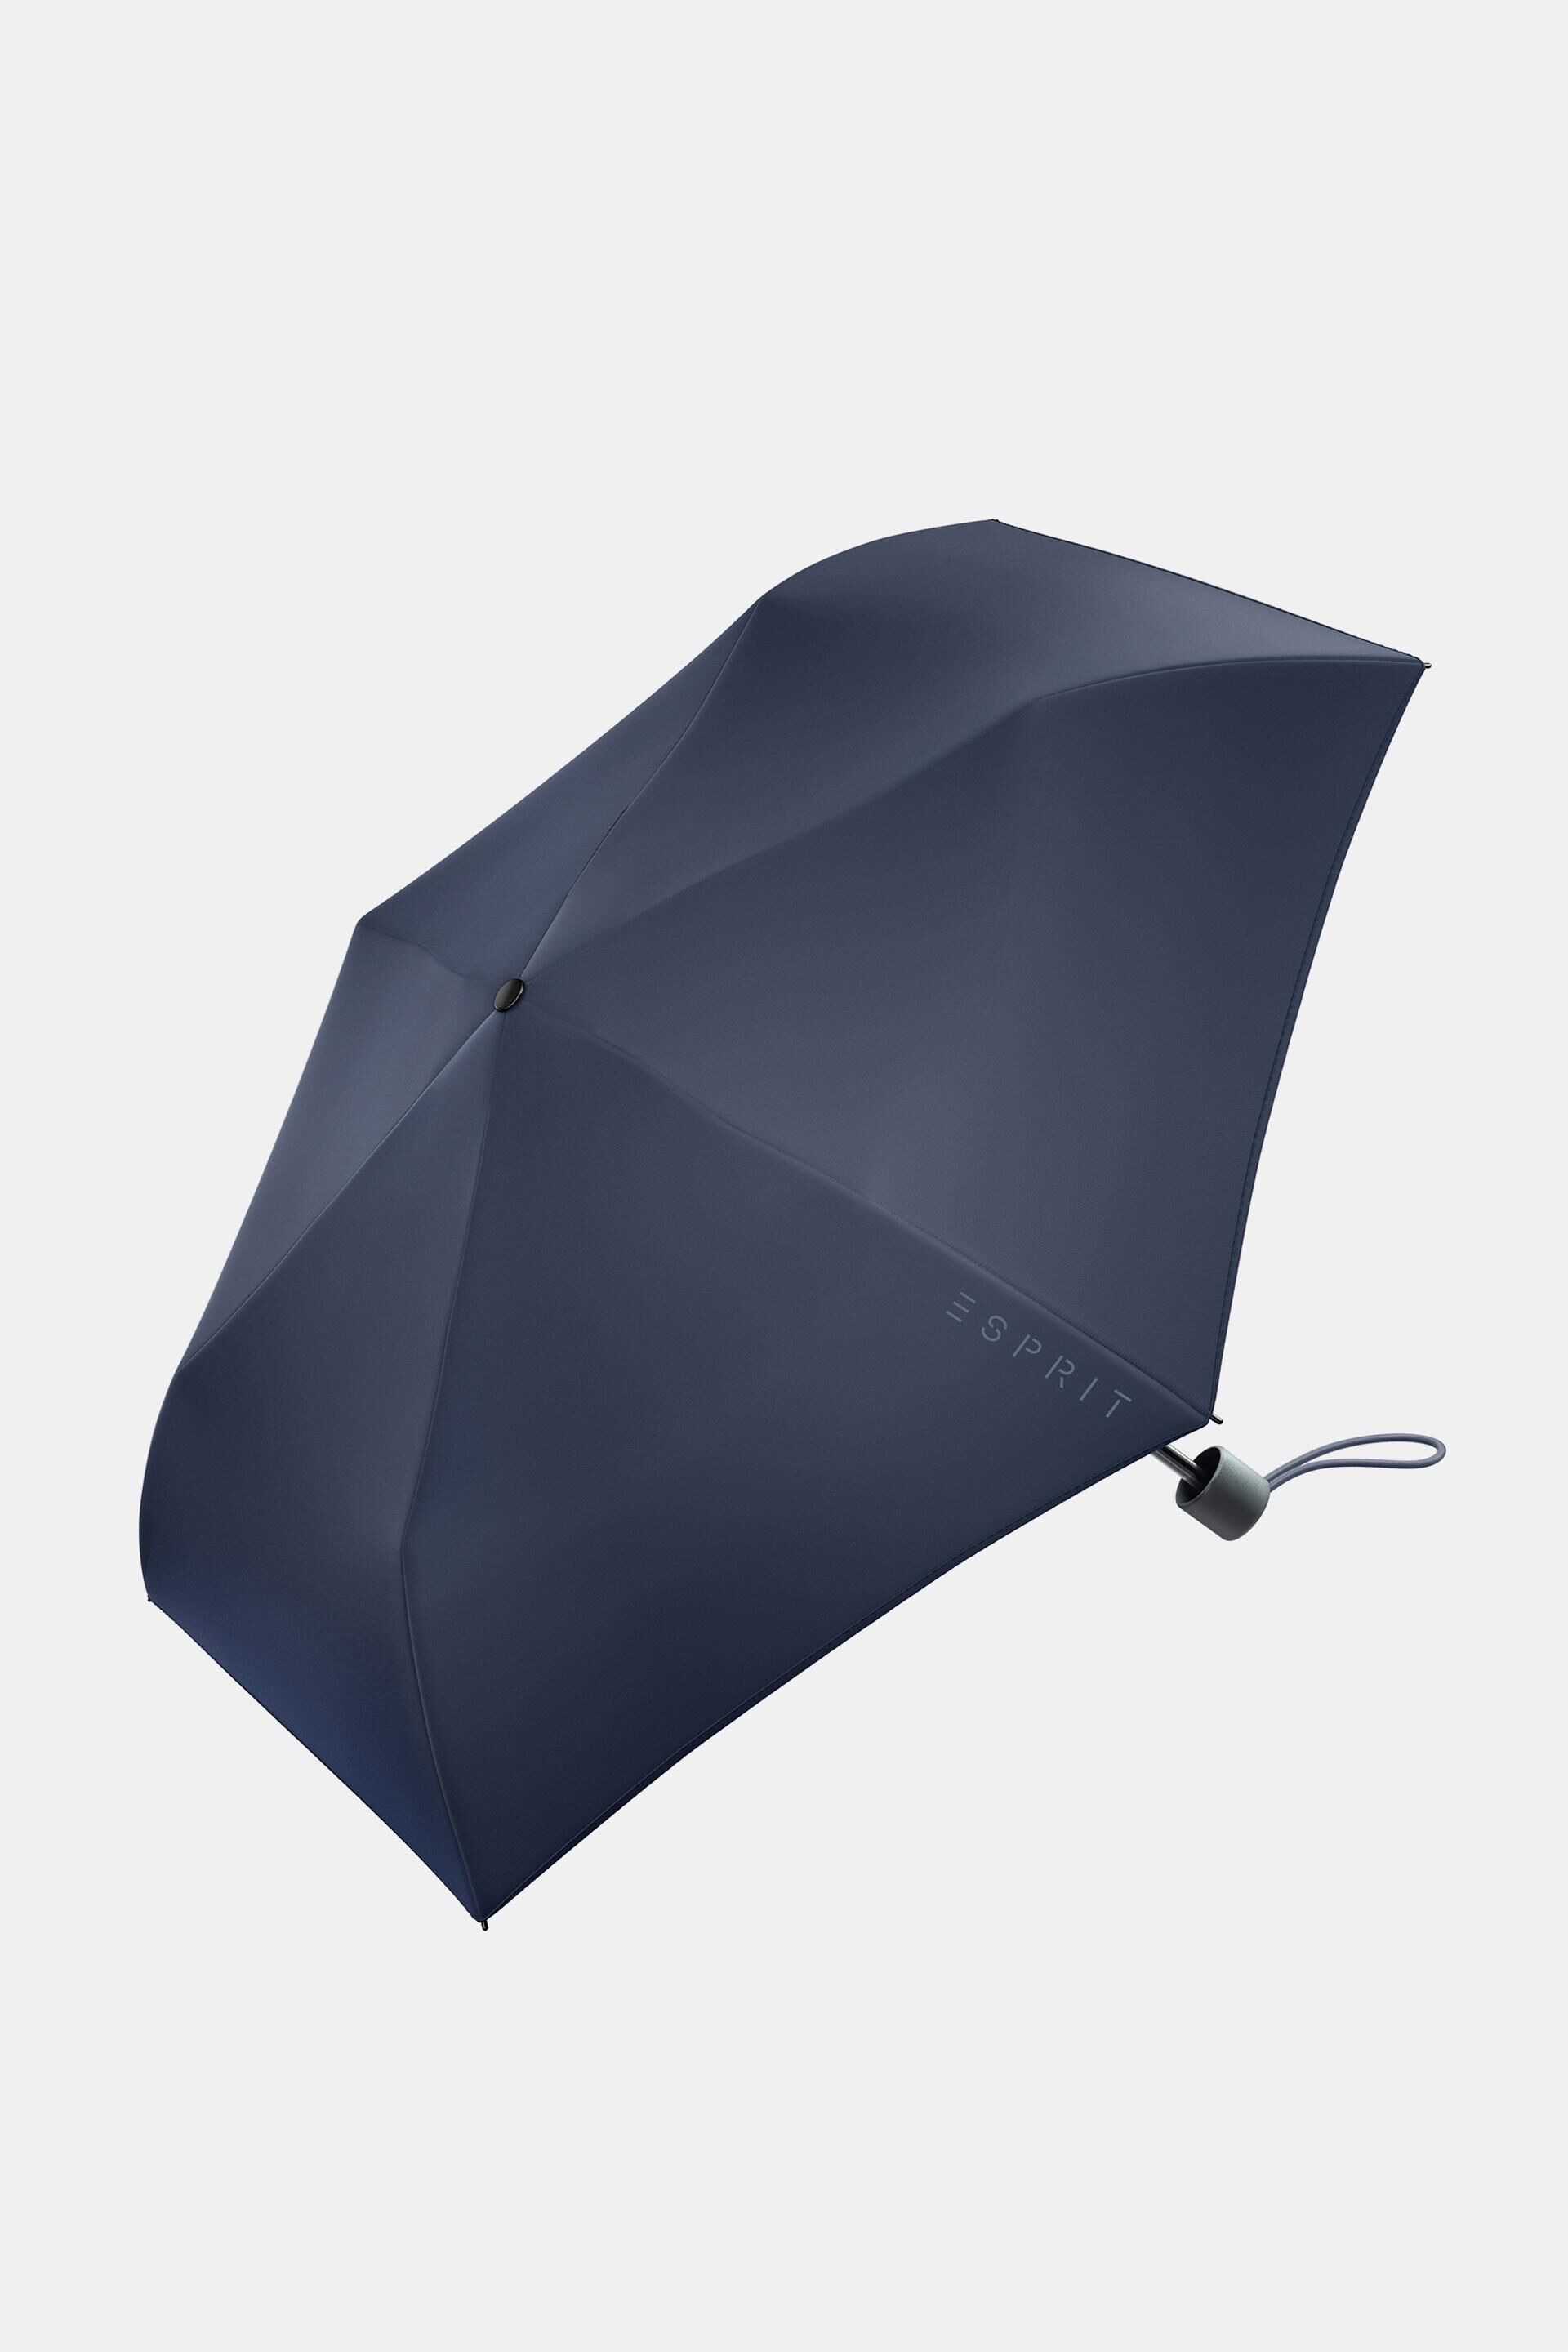 Esprit Online Store Pocket umbrella in navy with blue print logo